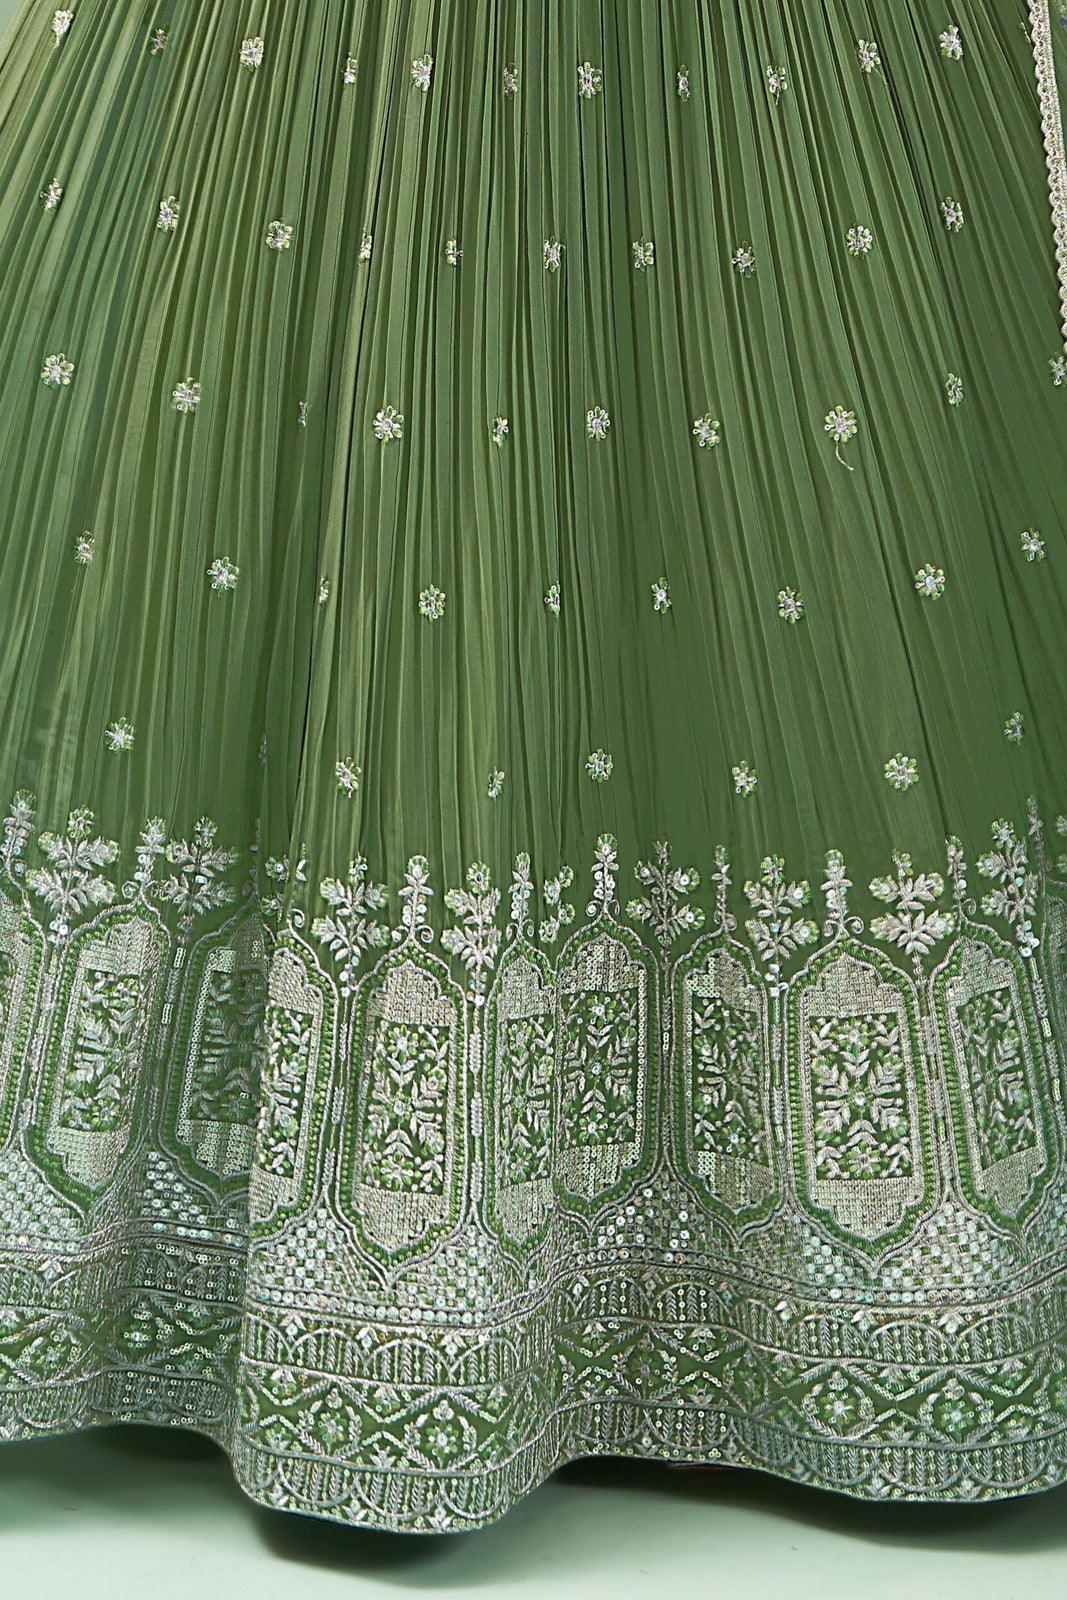 Green Sequins, Zari and Thread work Floor Length Anarkali Suit - Seasons Chennai